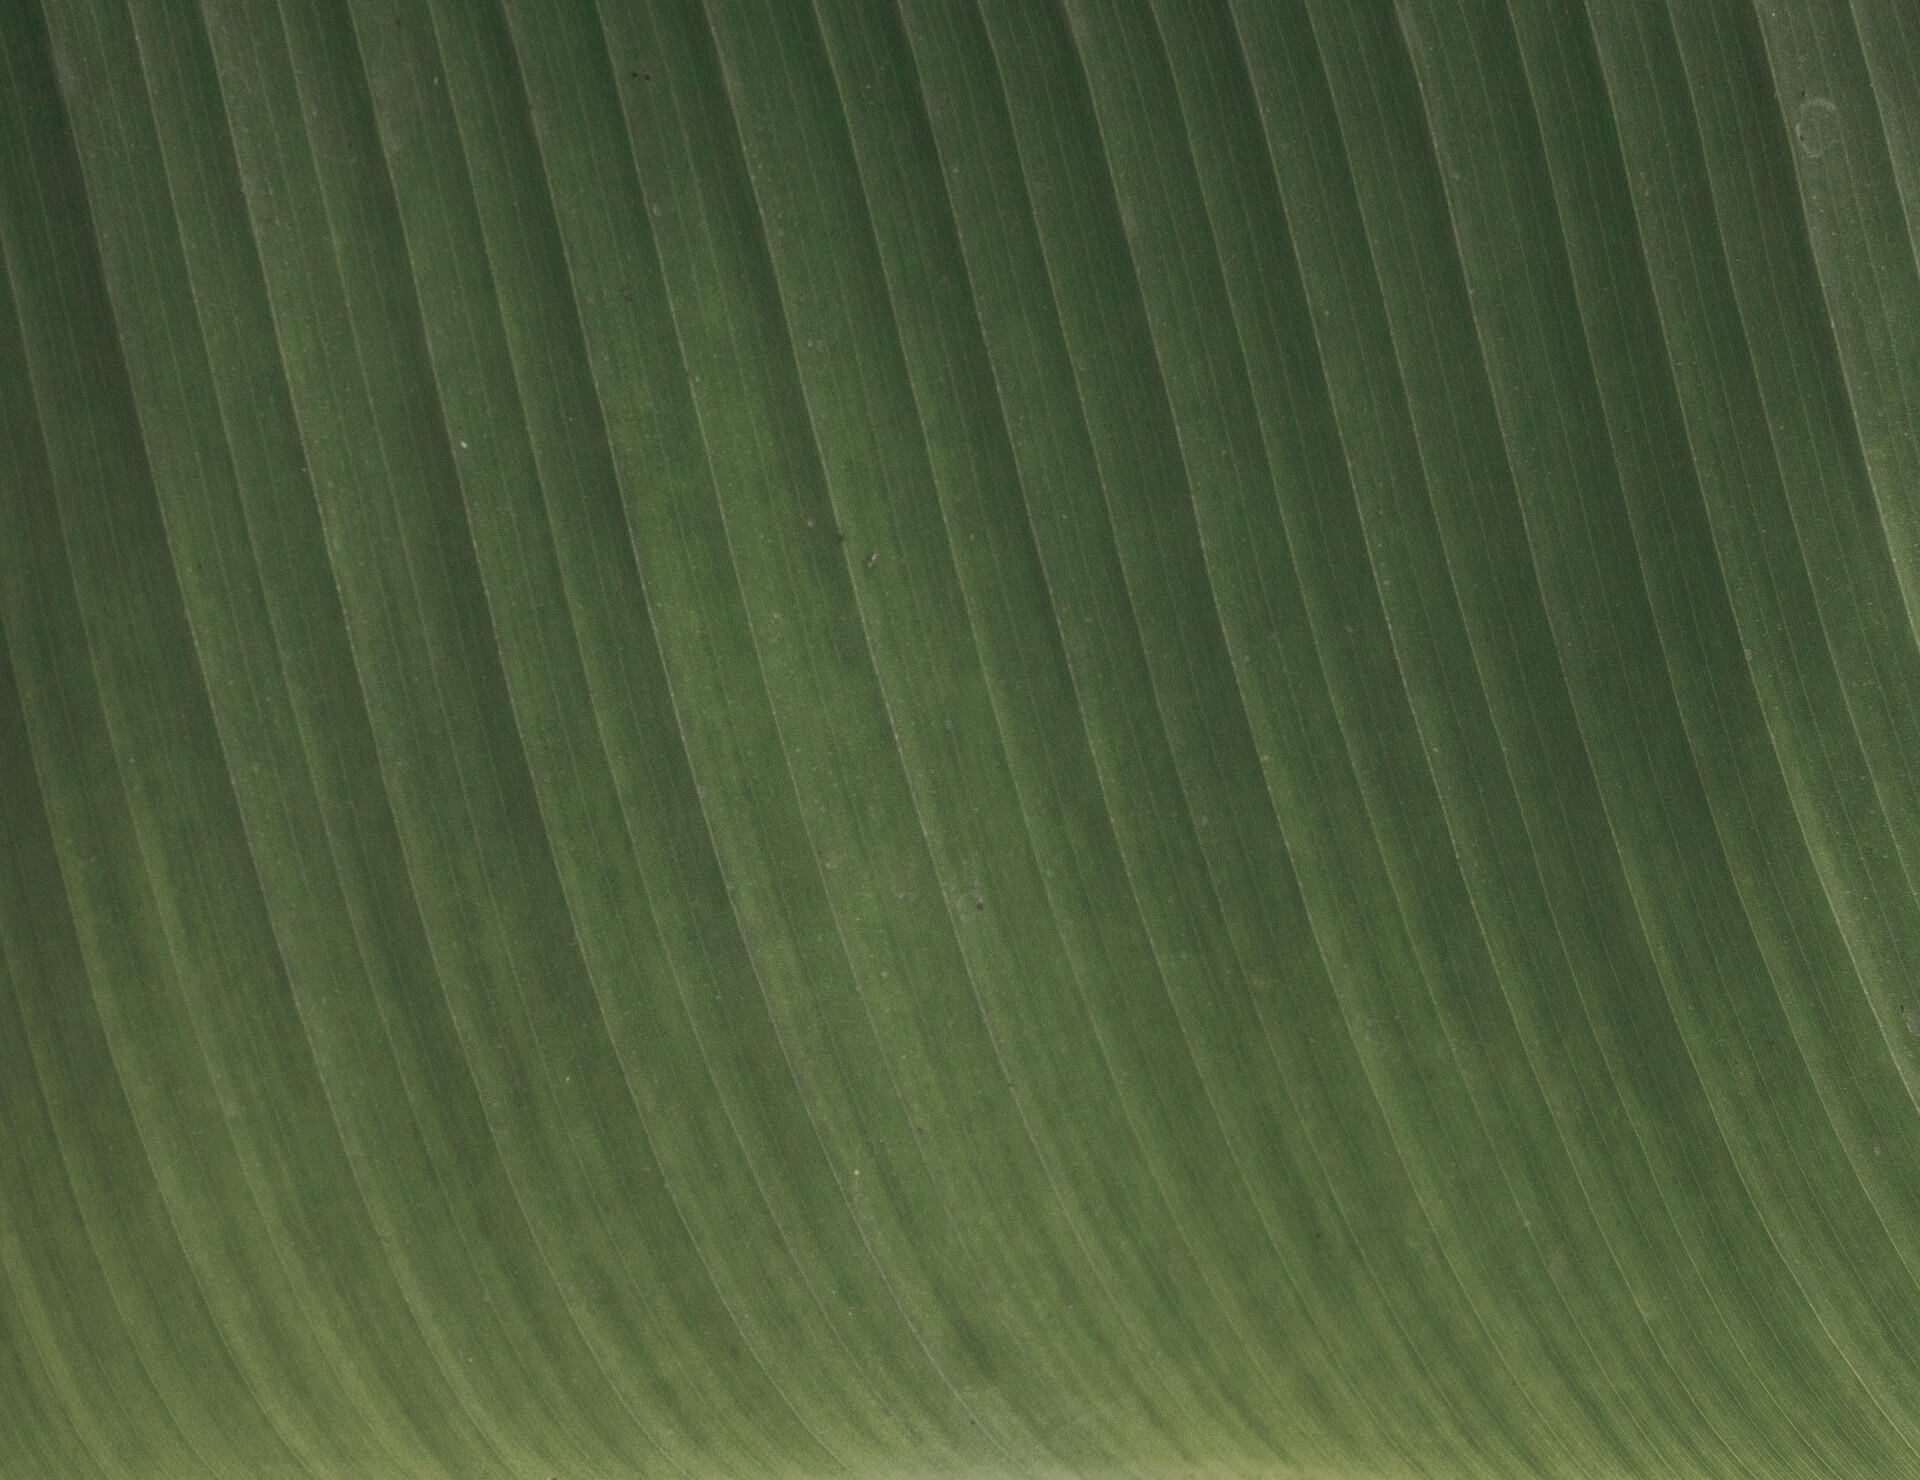 Leafy background